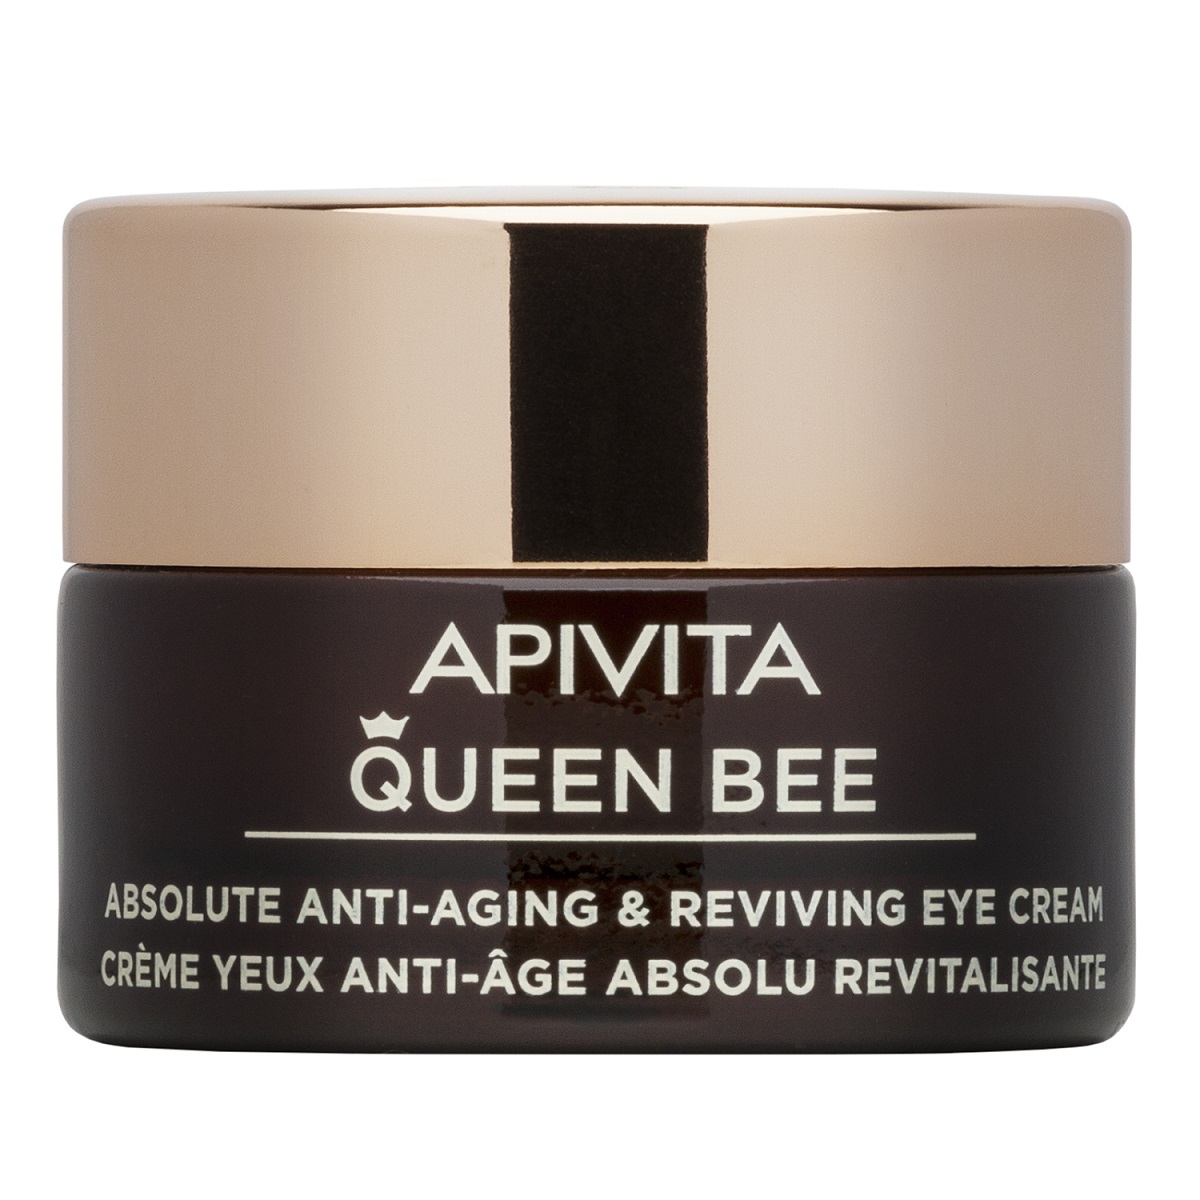 Apivita Комплексный антивозрастной восстанавливающий крем для кожи контура глаз, 15 мл (Apivita, Queen Bee) apivita уход queen bee комплексный для кожи вокруг глаз флакон помпа 15 мл